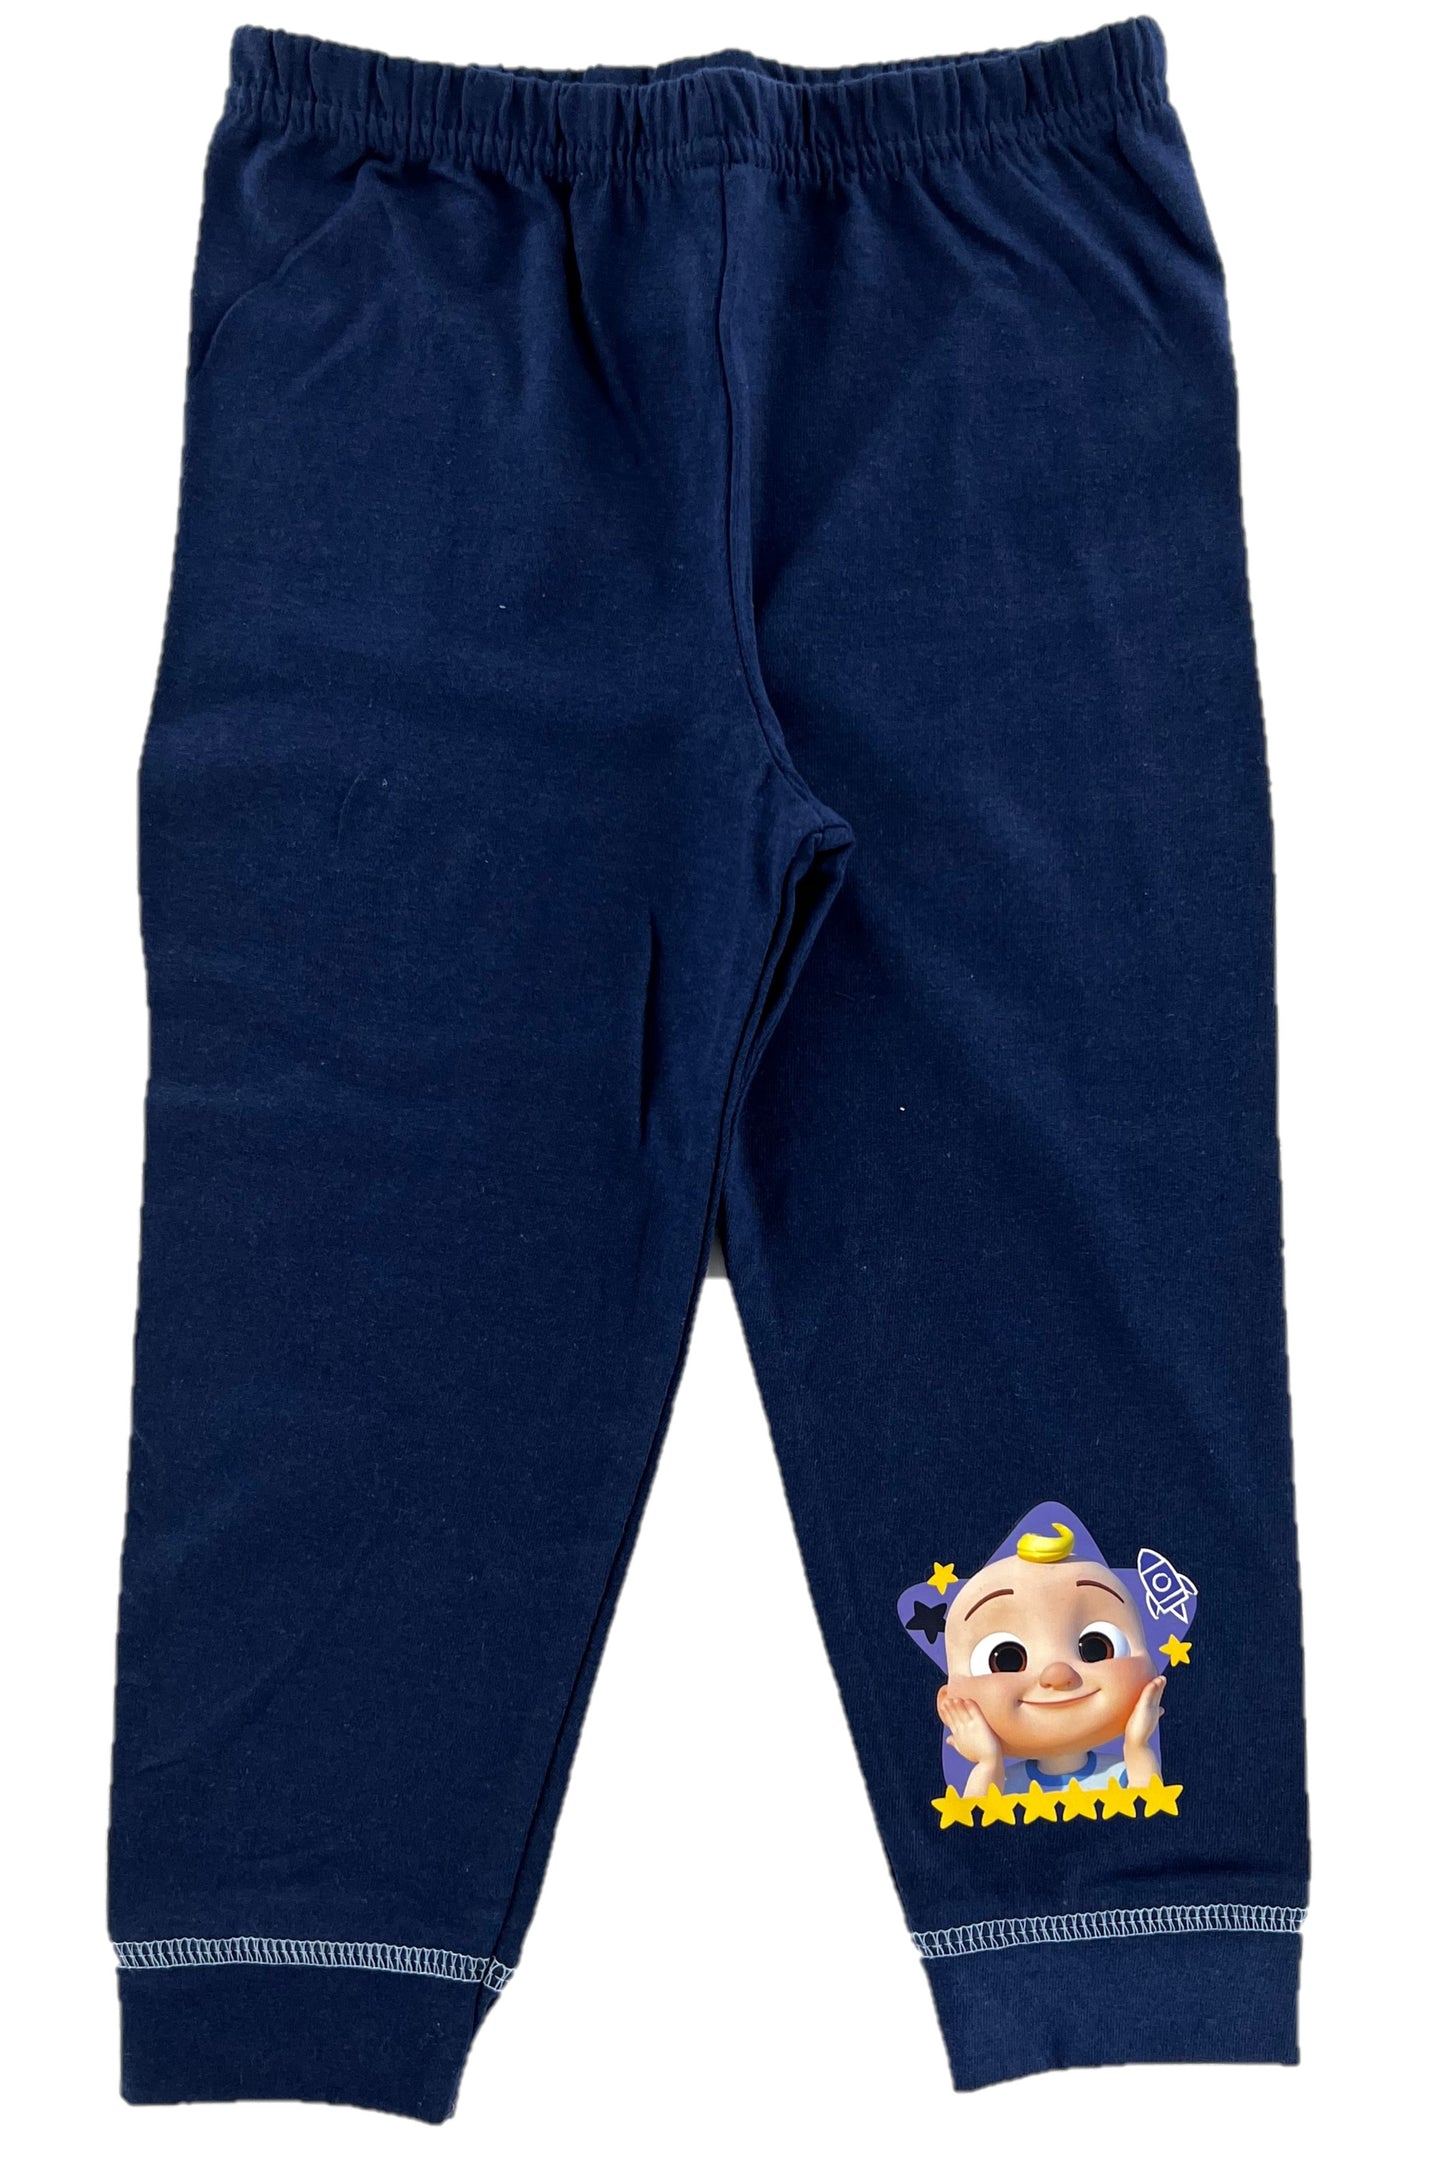 Cocomelon Boys Pyjamas “Stars” 1-4 Years, Great Gift Idea